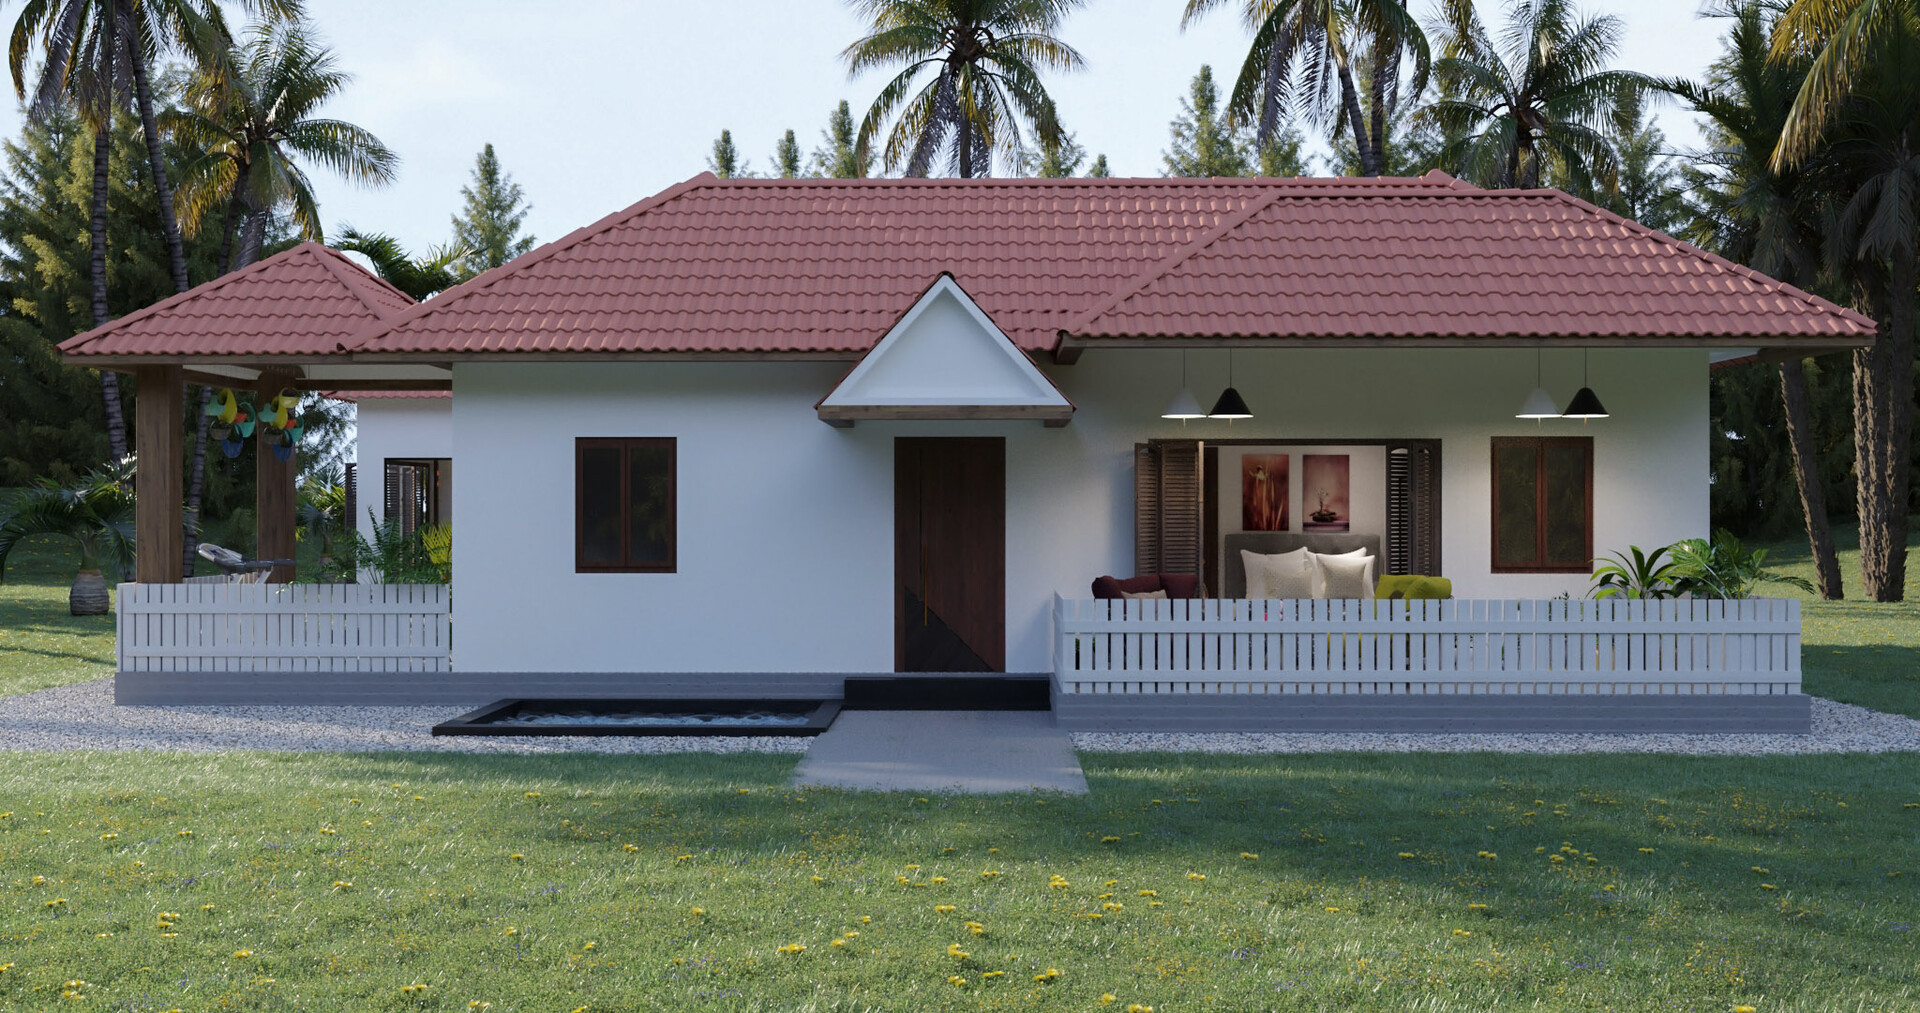 Kerala Traditional House Plans Design Joy Studio House Plans 27493